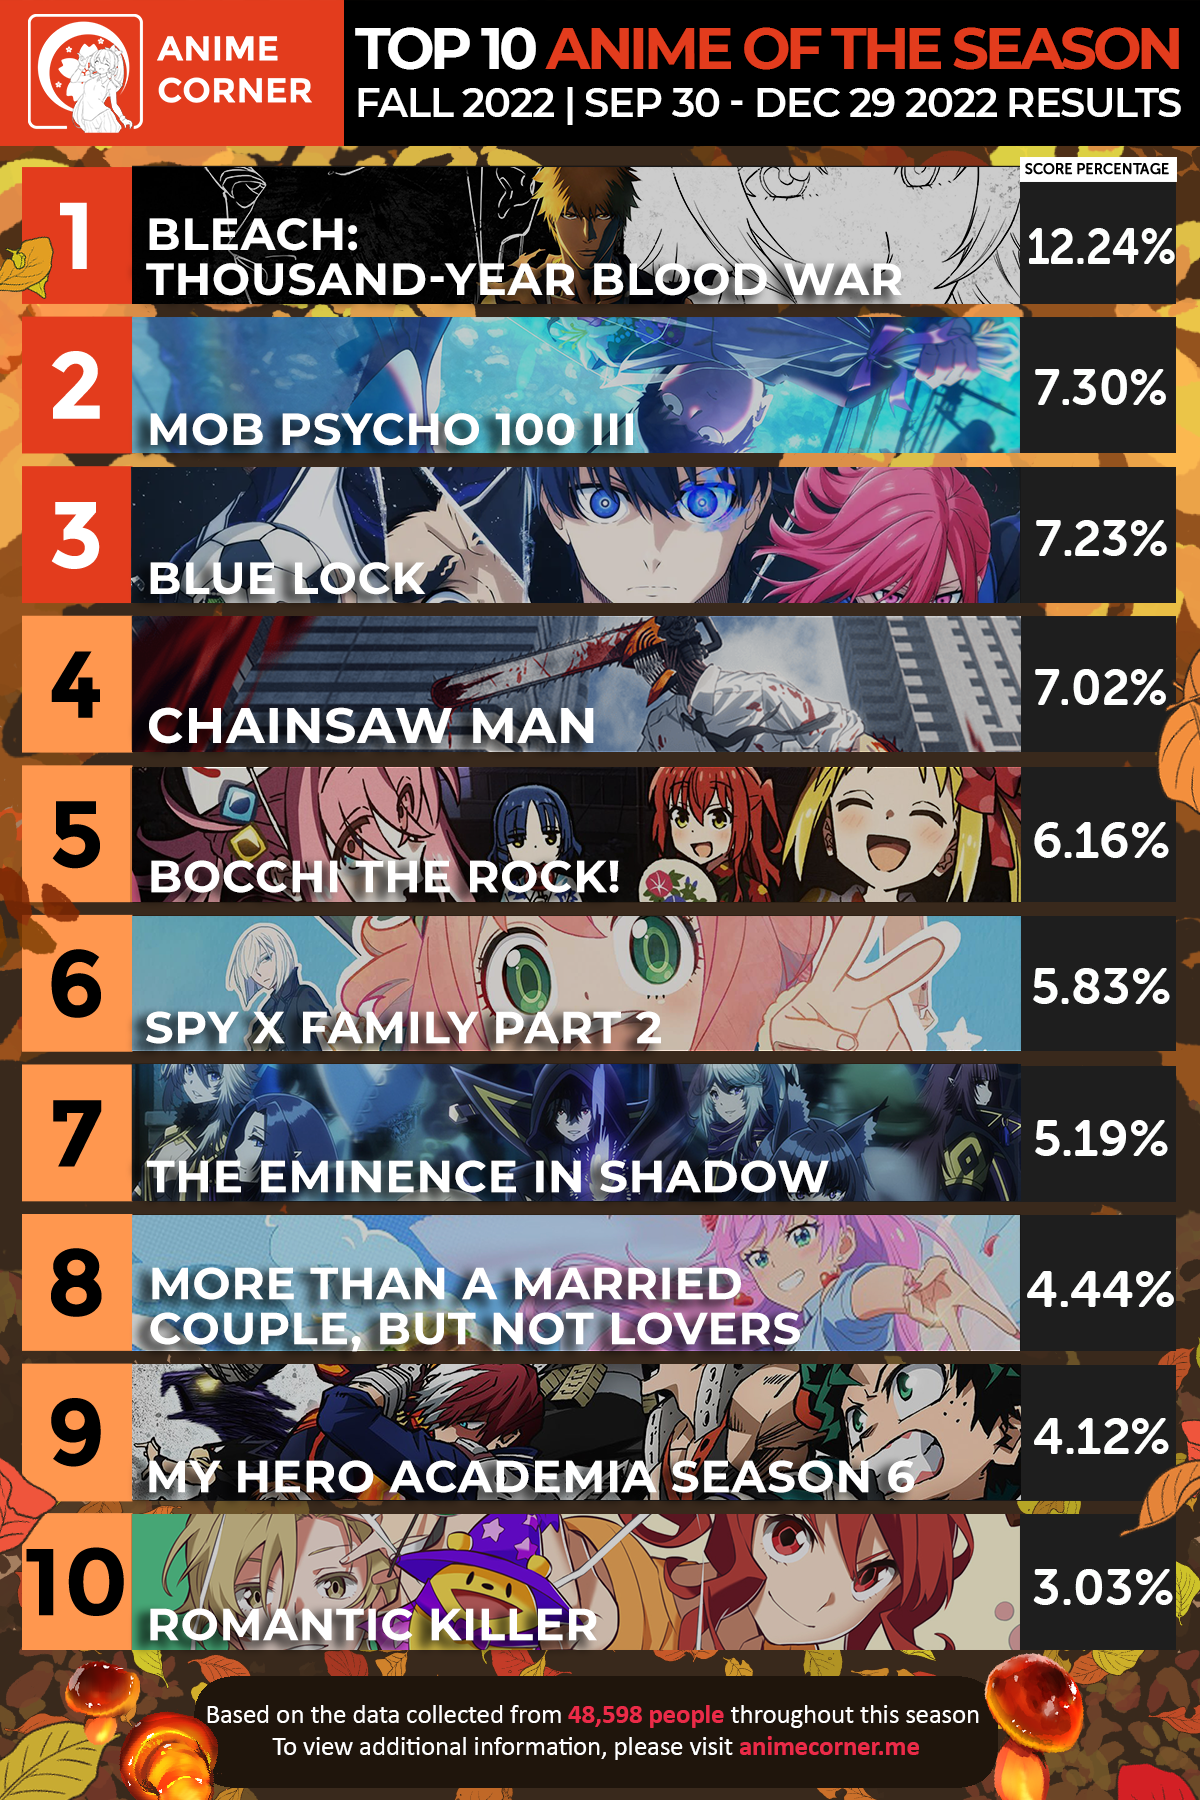 Top 10 Fall 2022 Anime of the Season